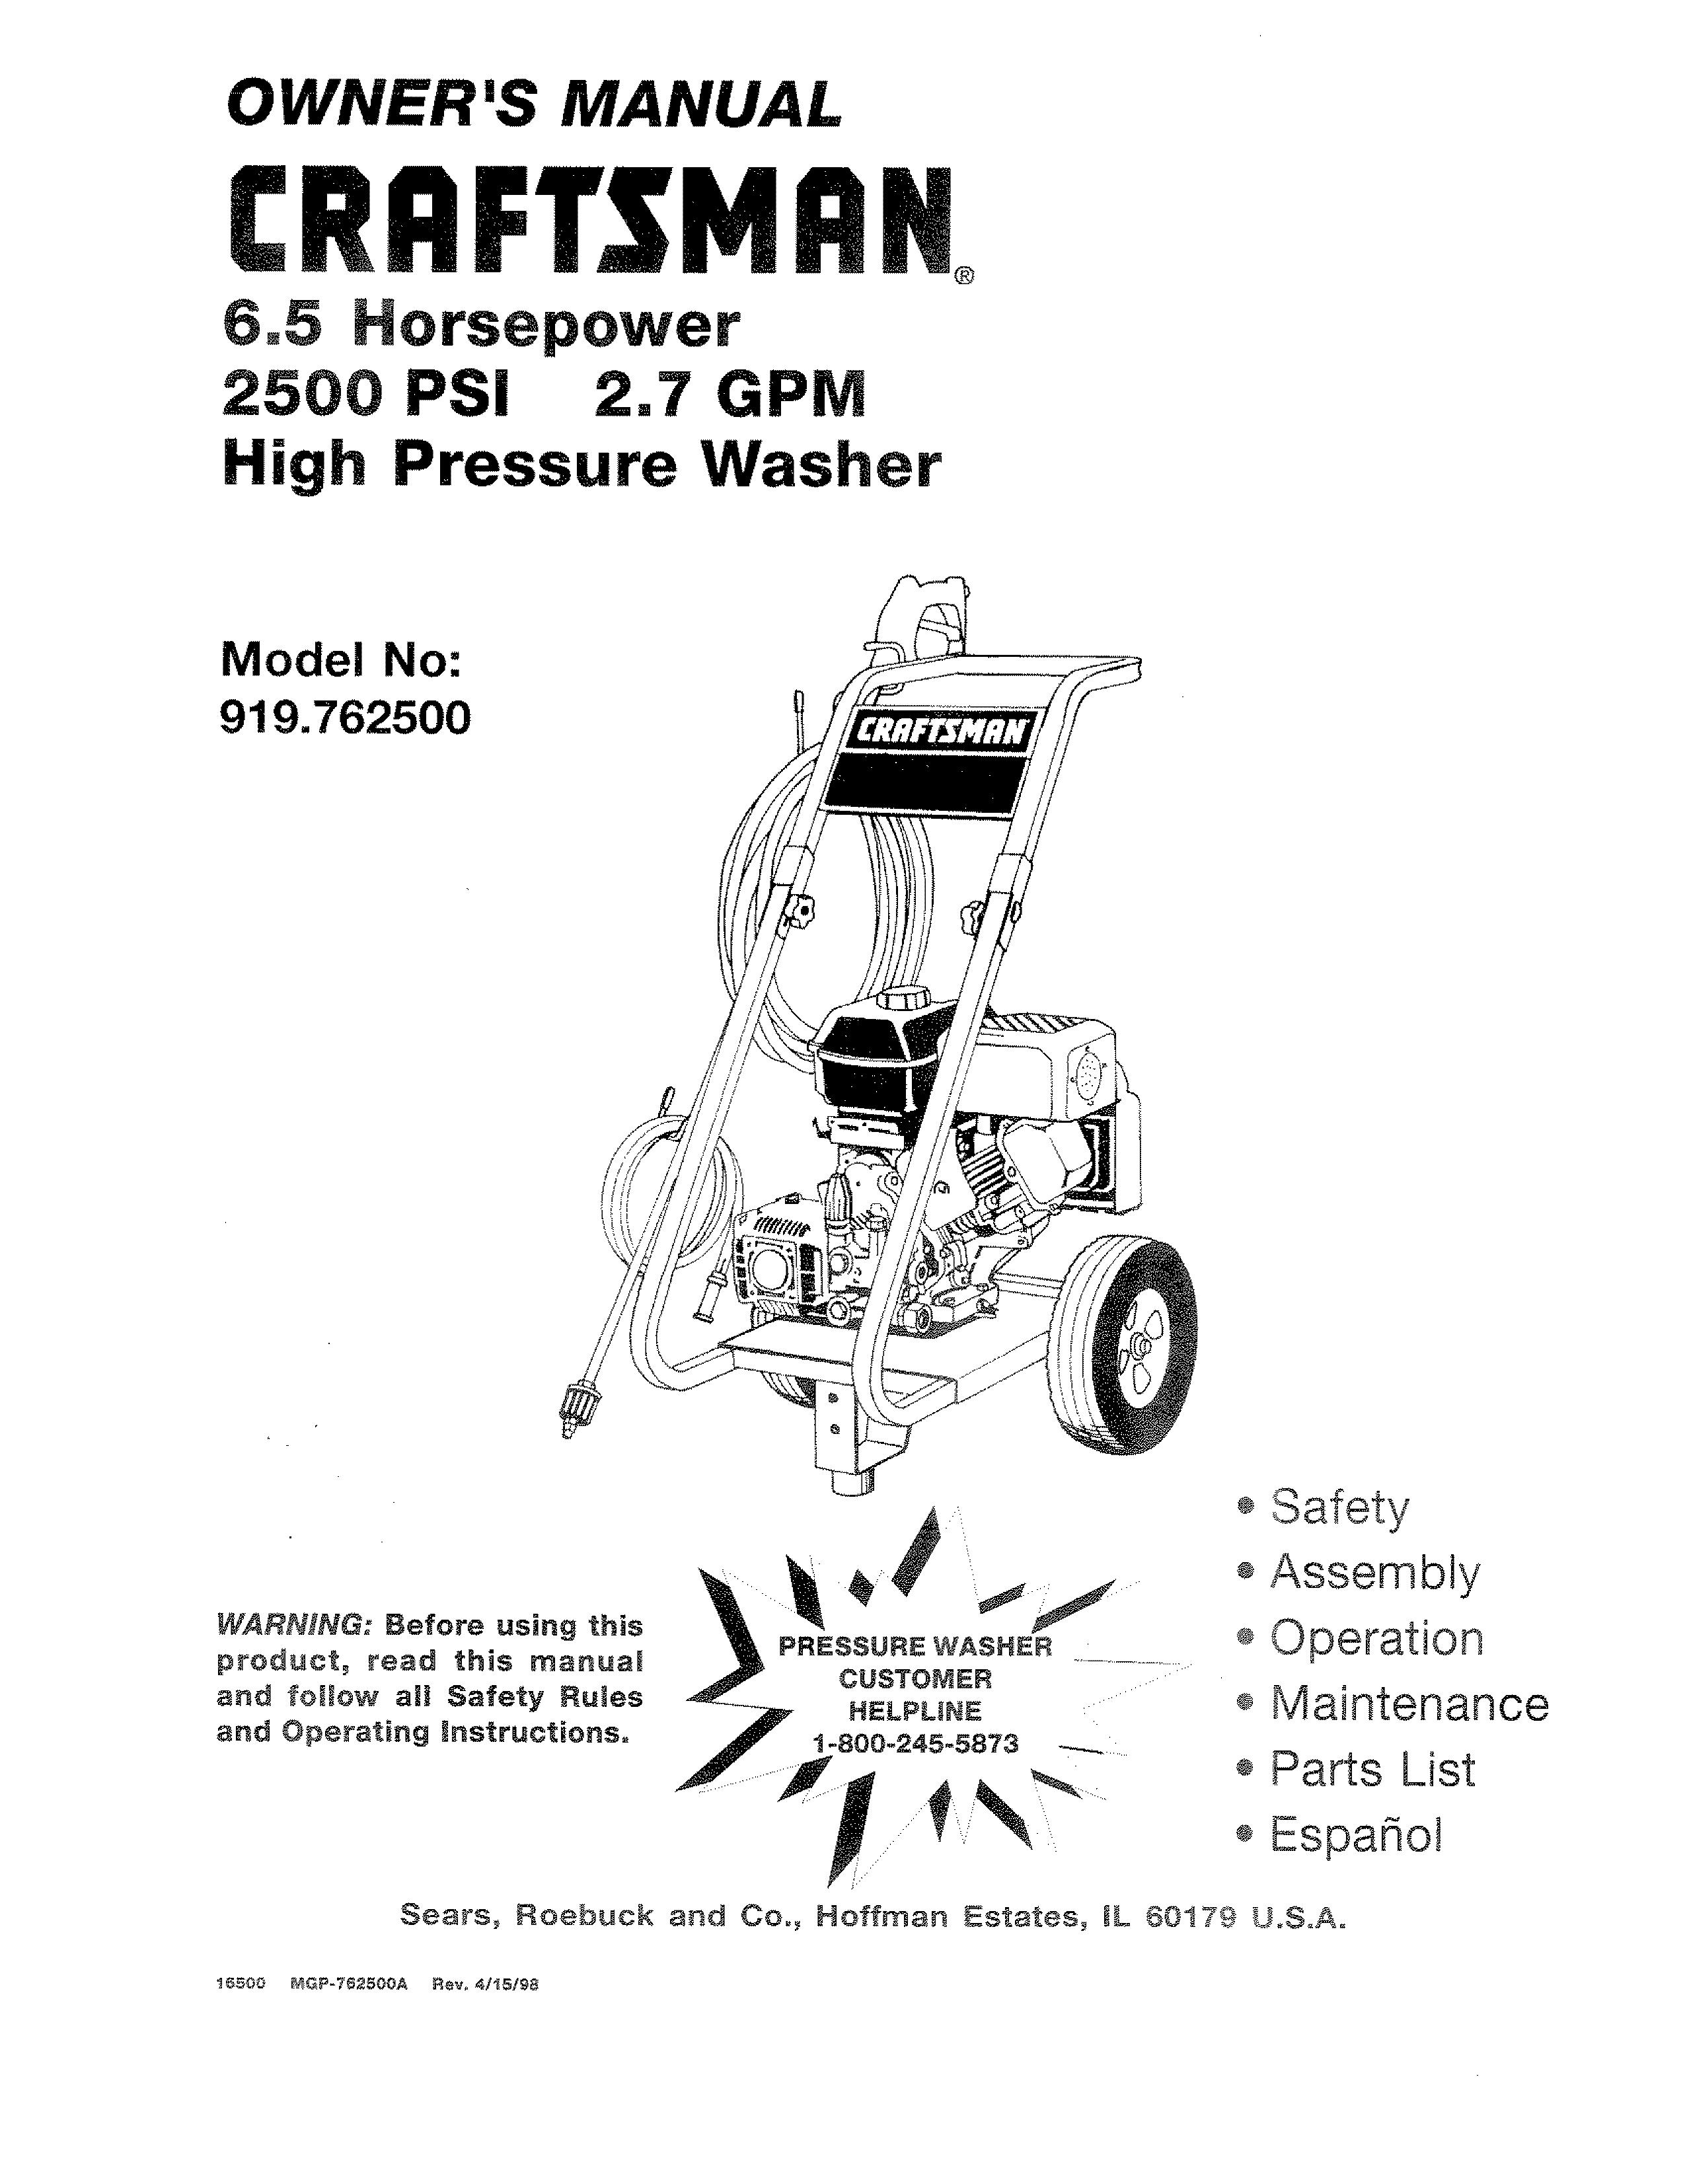 Craftsman 919.762500 Pressure Washer User Manual